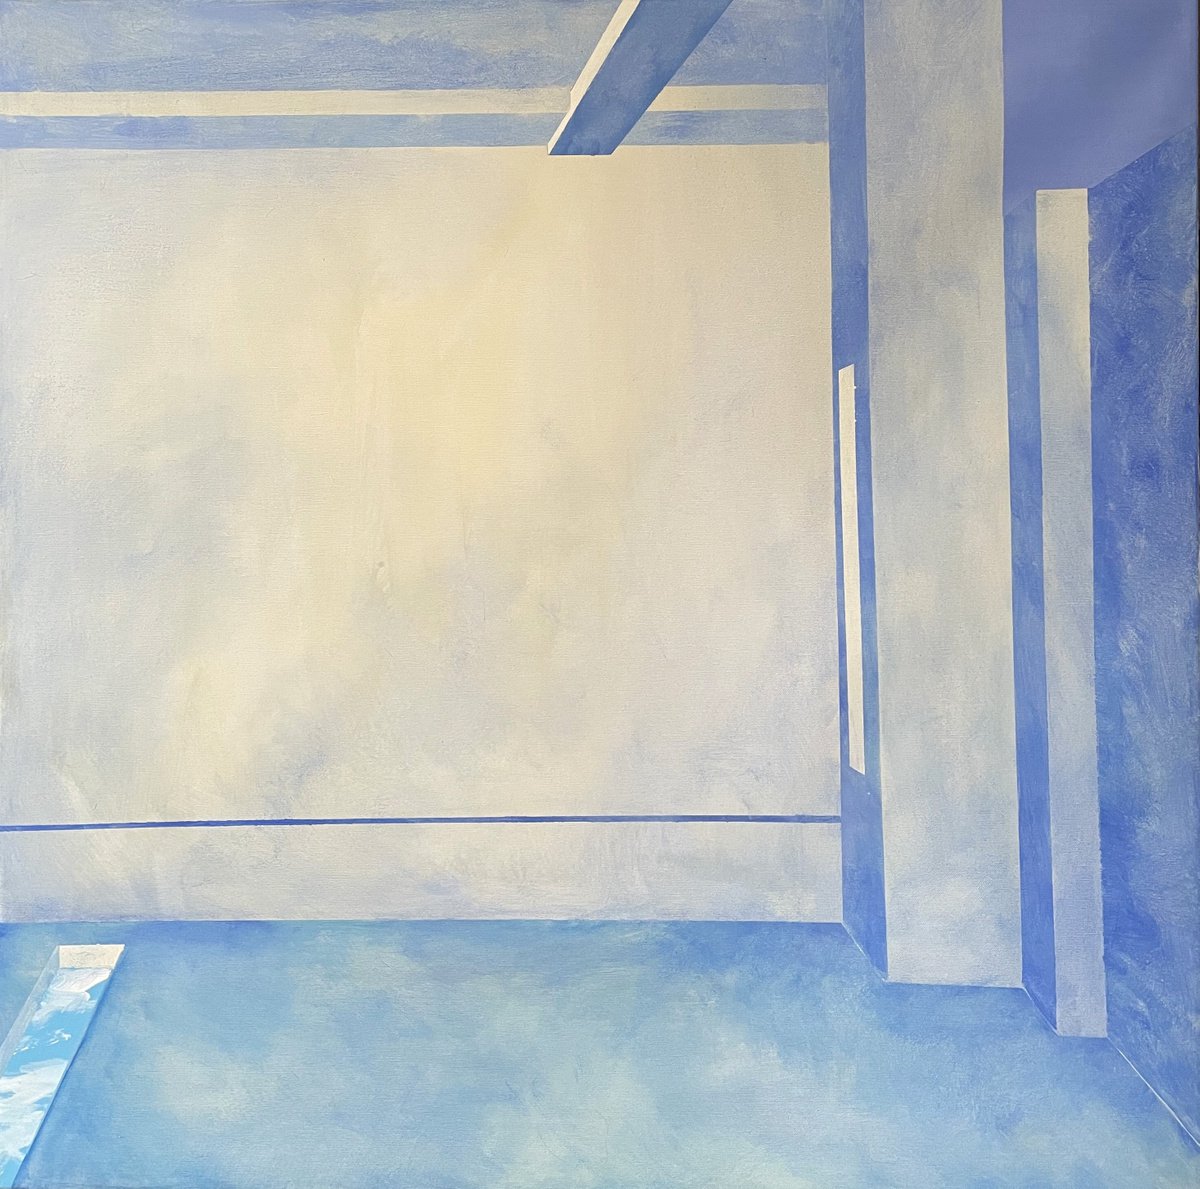 Blue Room 3 by Zakhar Shevchuk